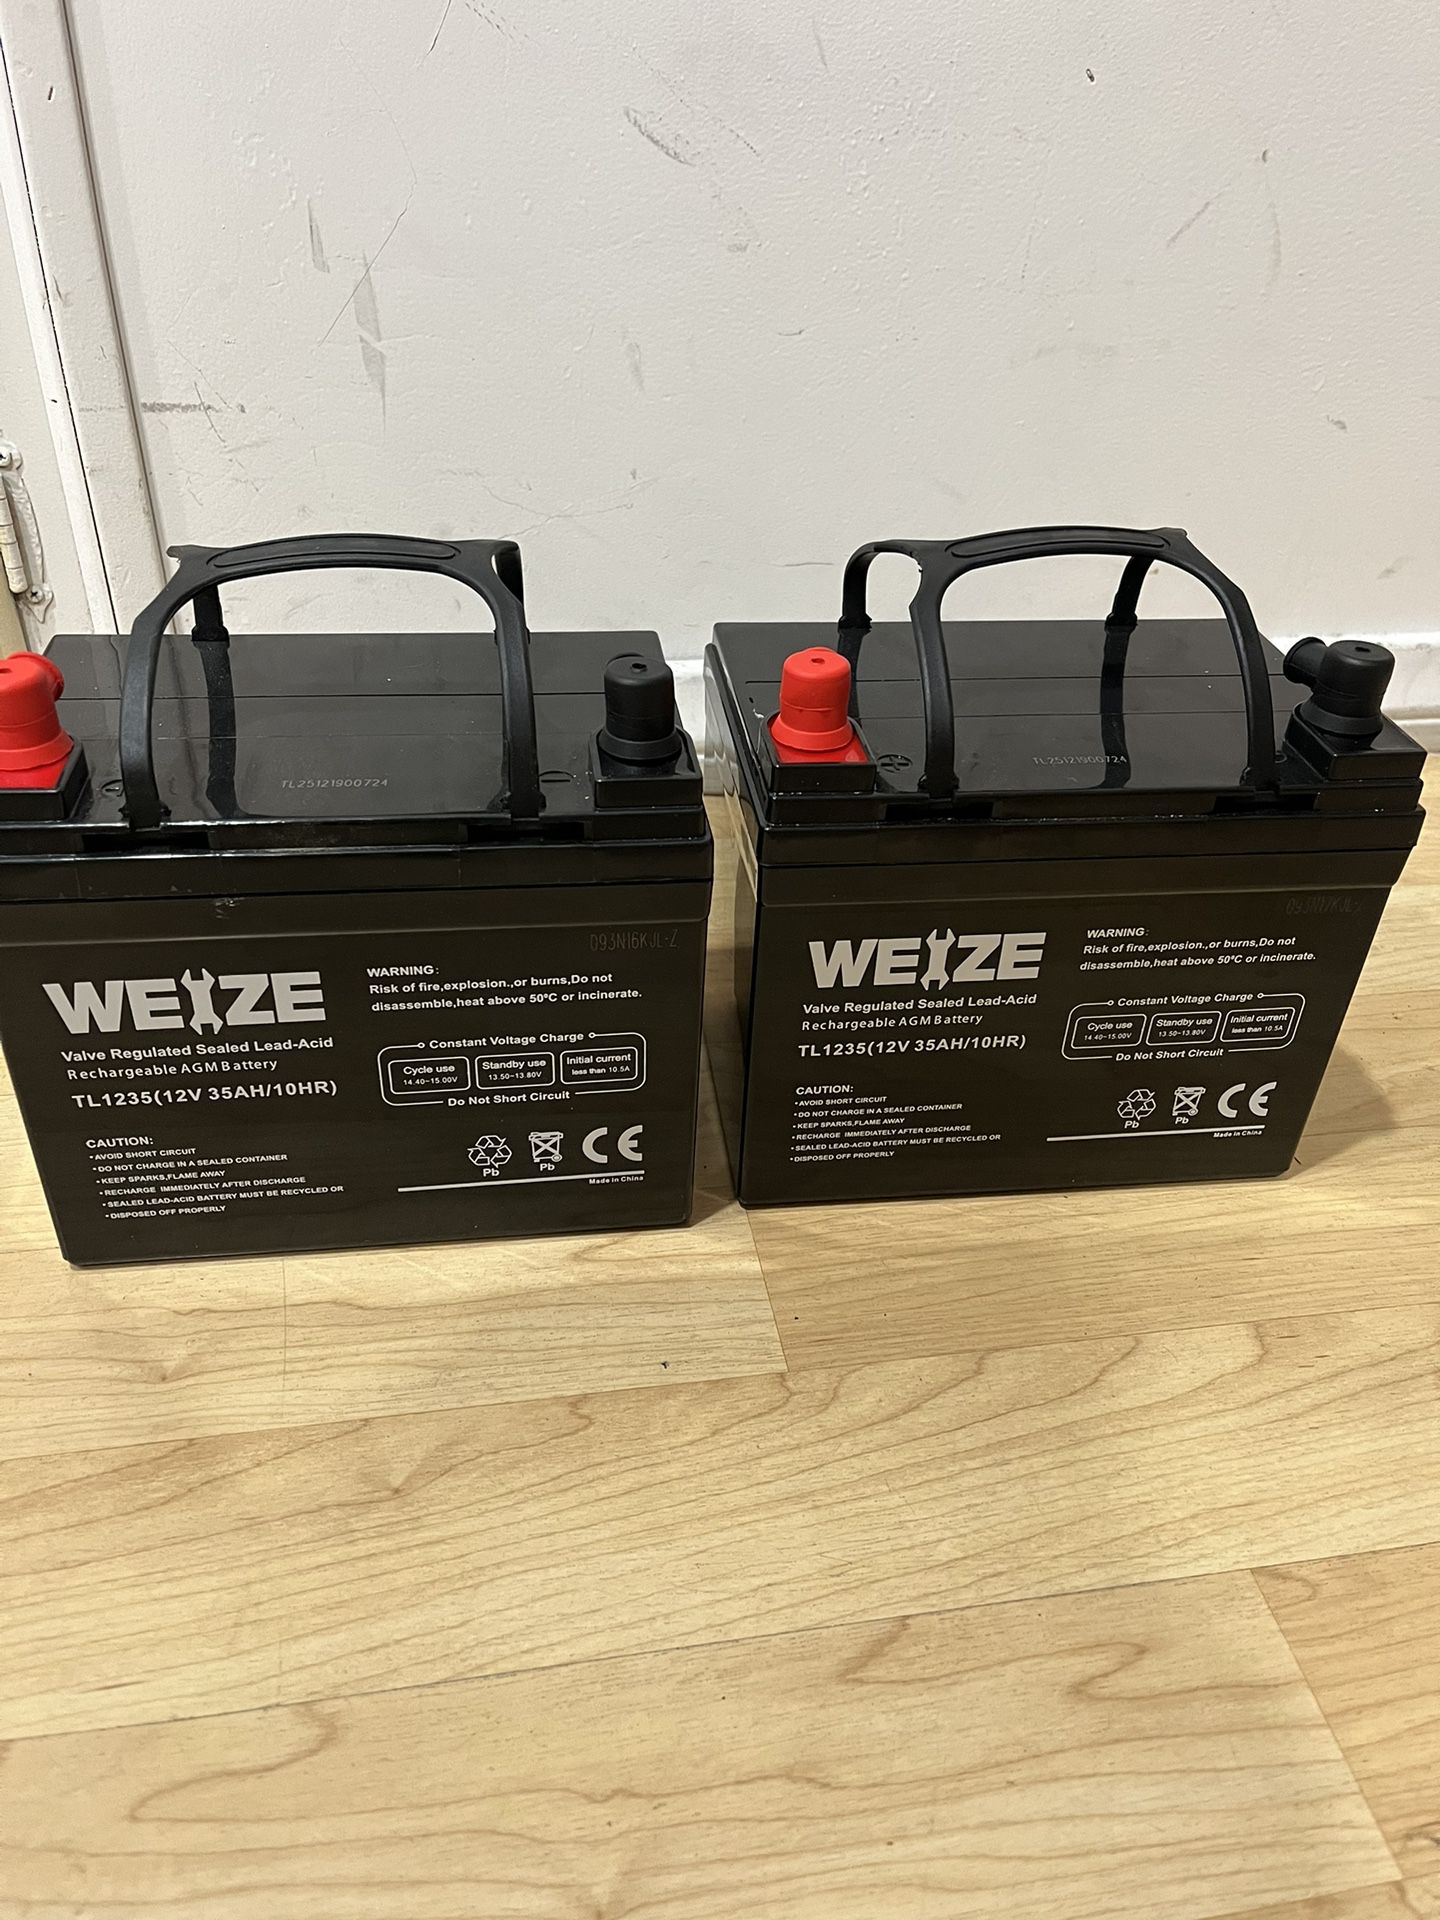 New WEISE Wheelchair Batteries 12 V 35 AH